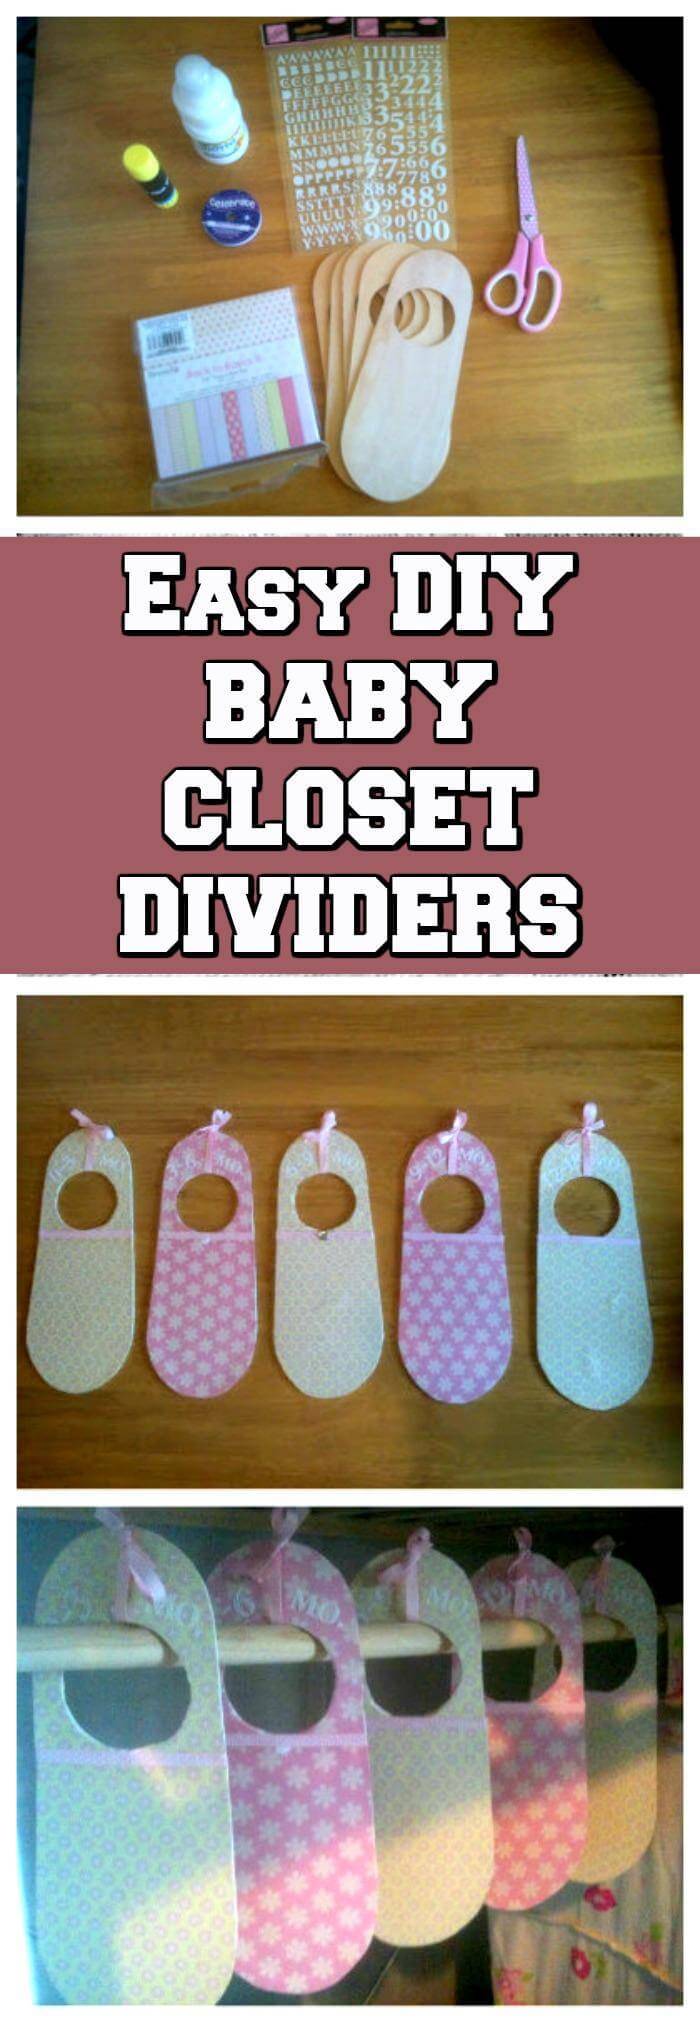 DIY baby closet divider